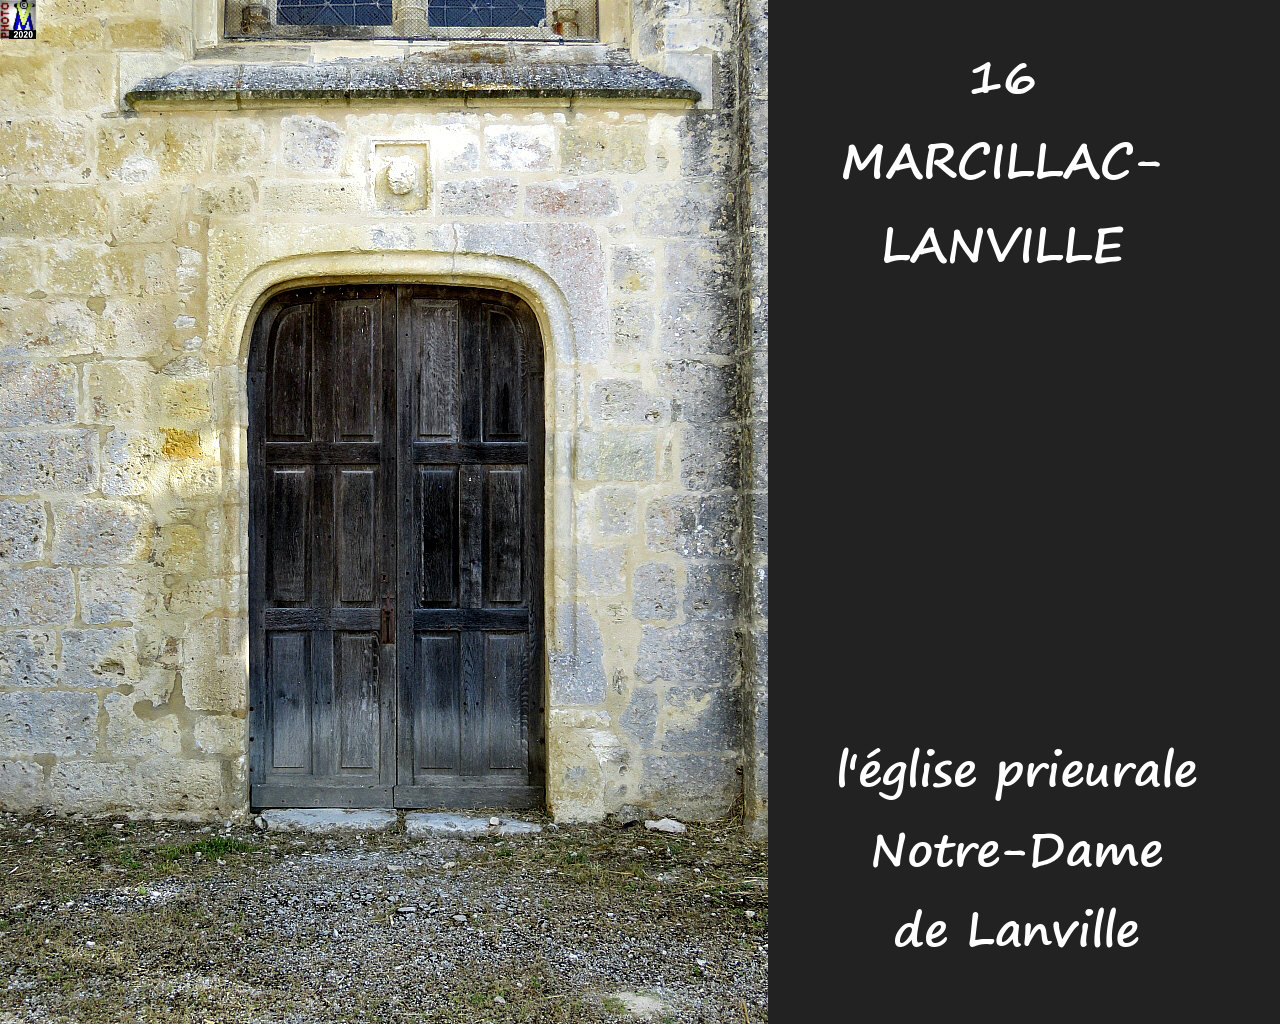 16MARCILLAC-LANVILLE_eglise_1018.jpg